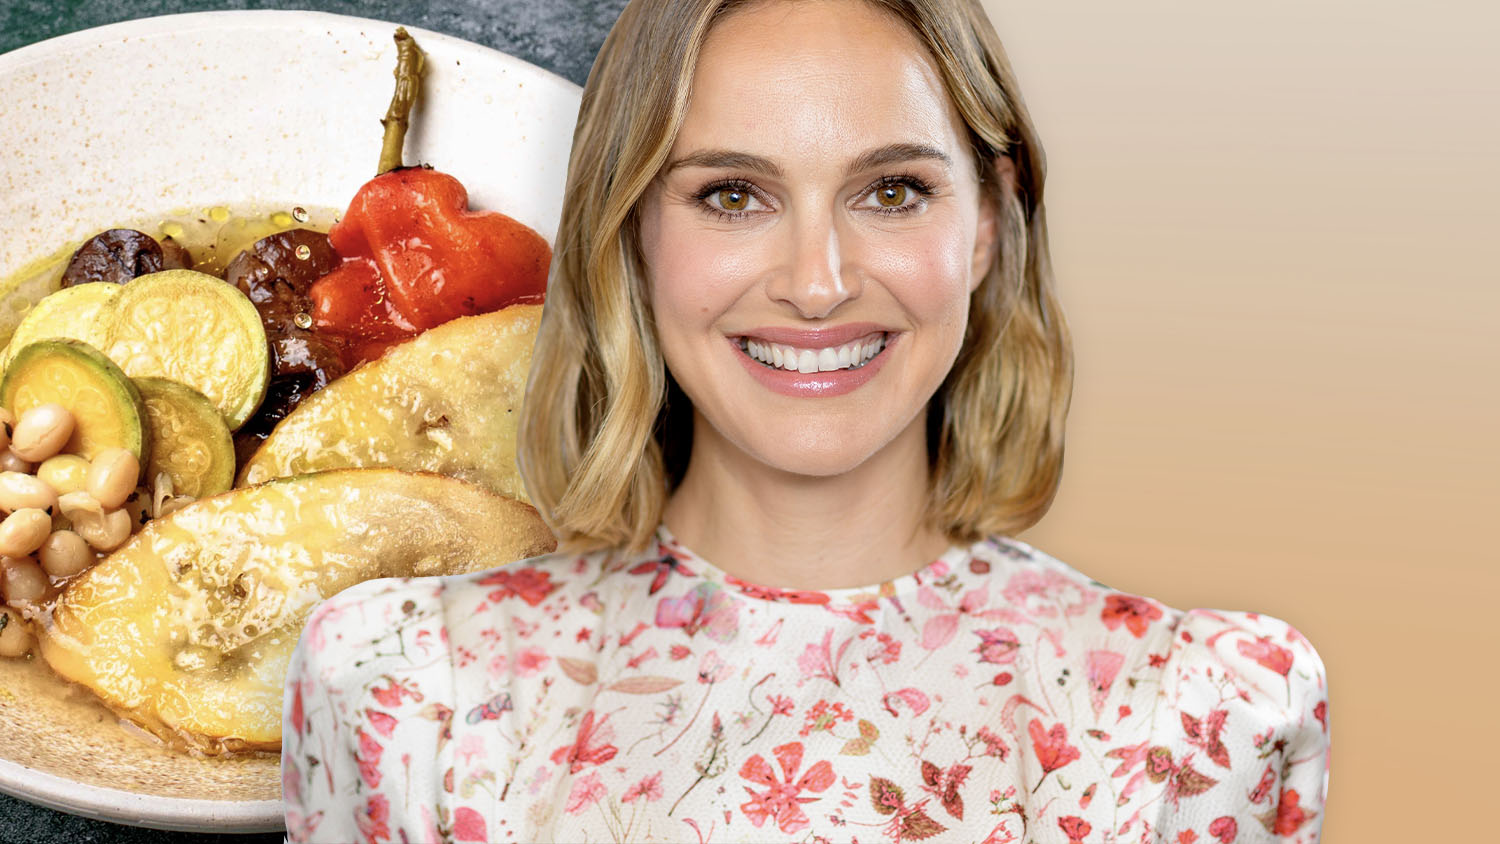 How to Cook Vegan, According to Natalie Portman